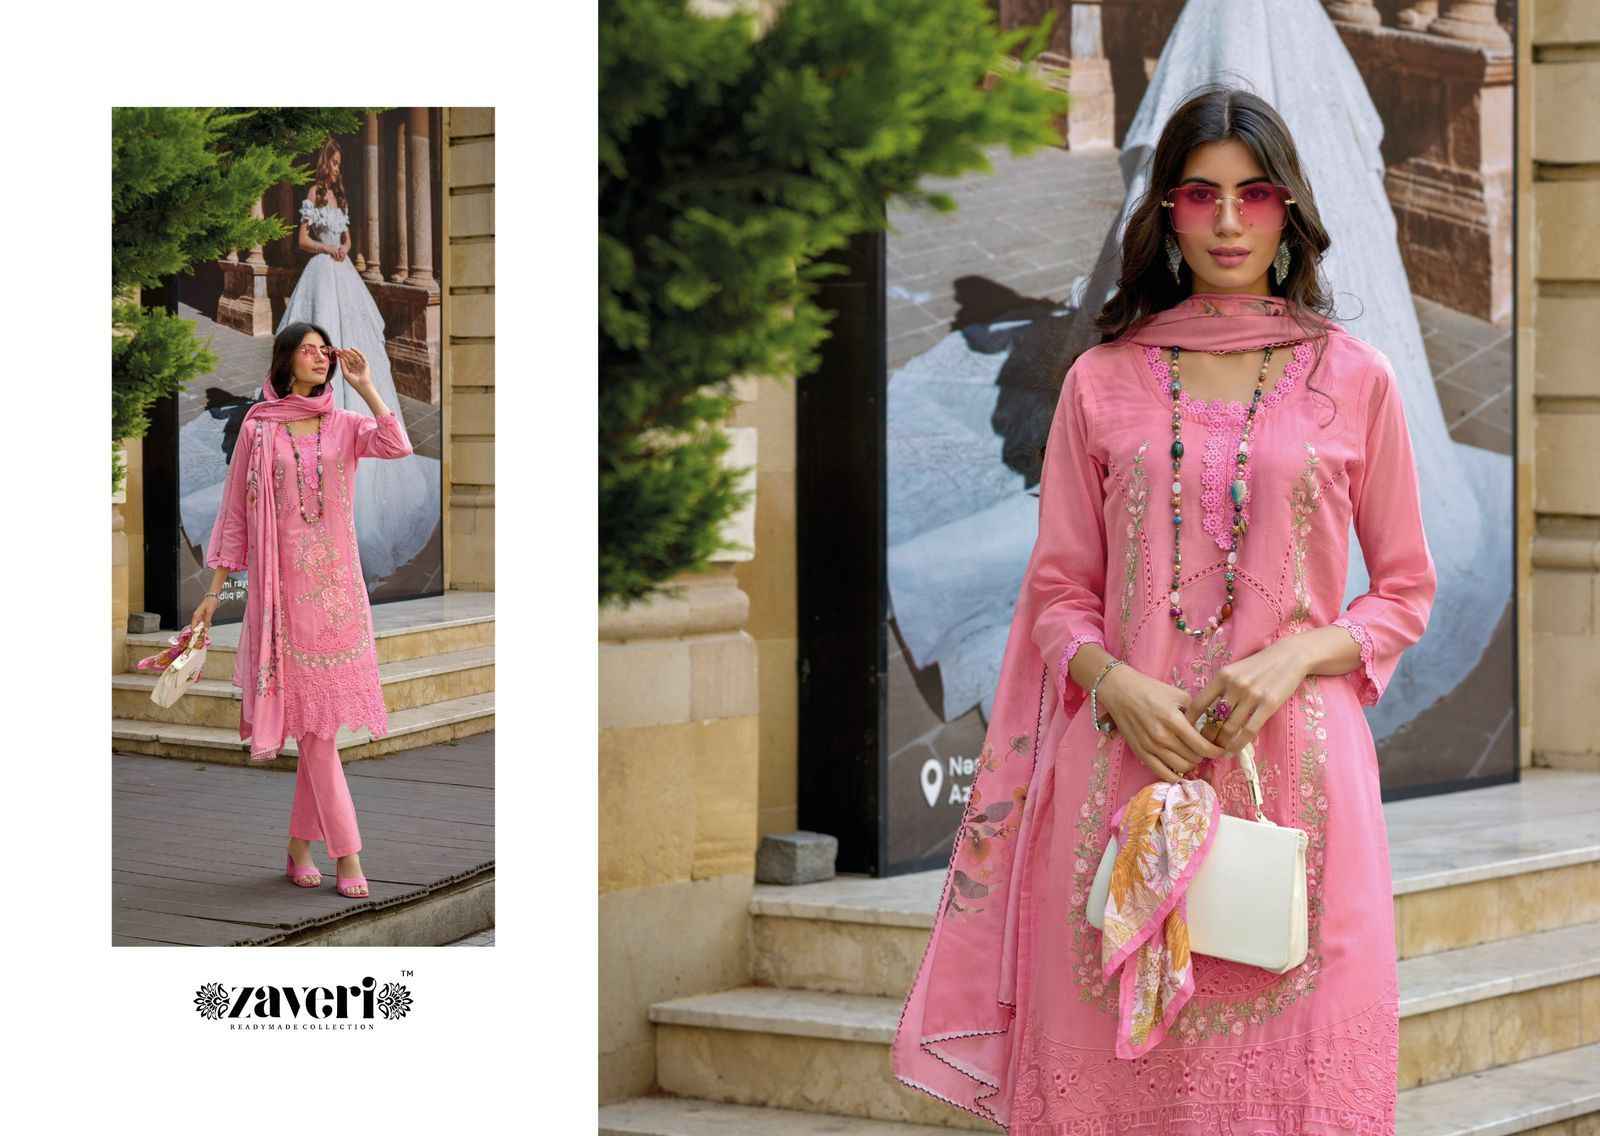 Zaveri Rubina Readymade Cotton Dress 3 pcs Catalogue